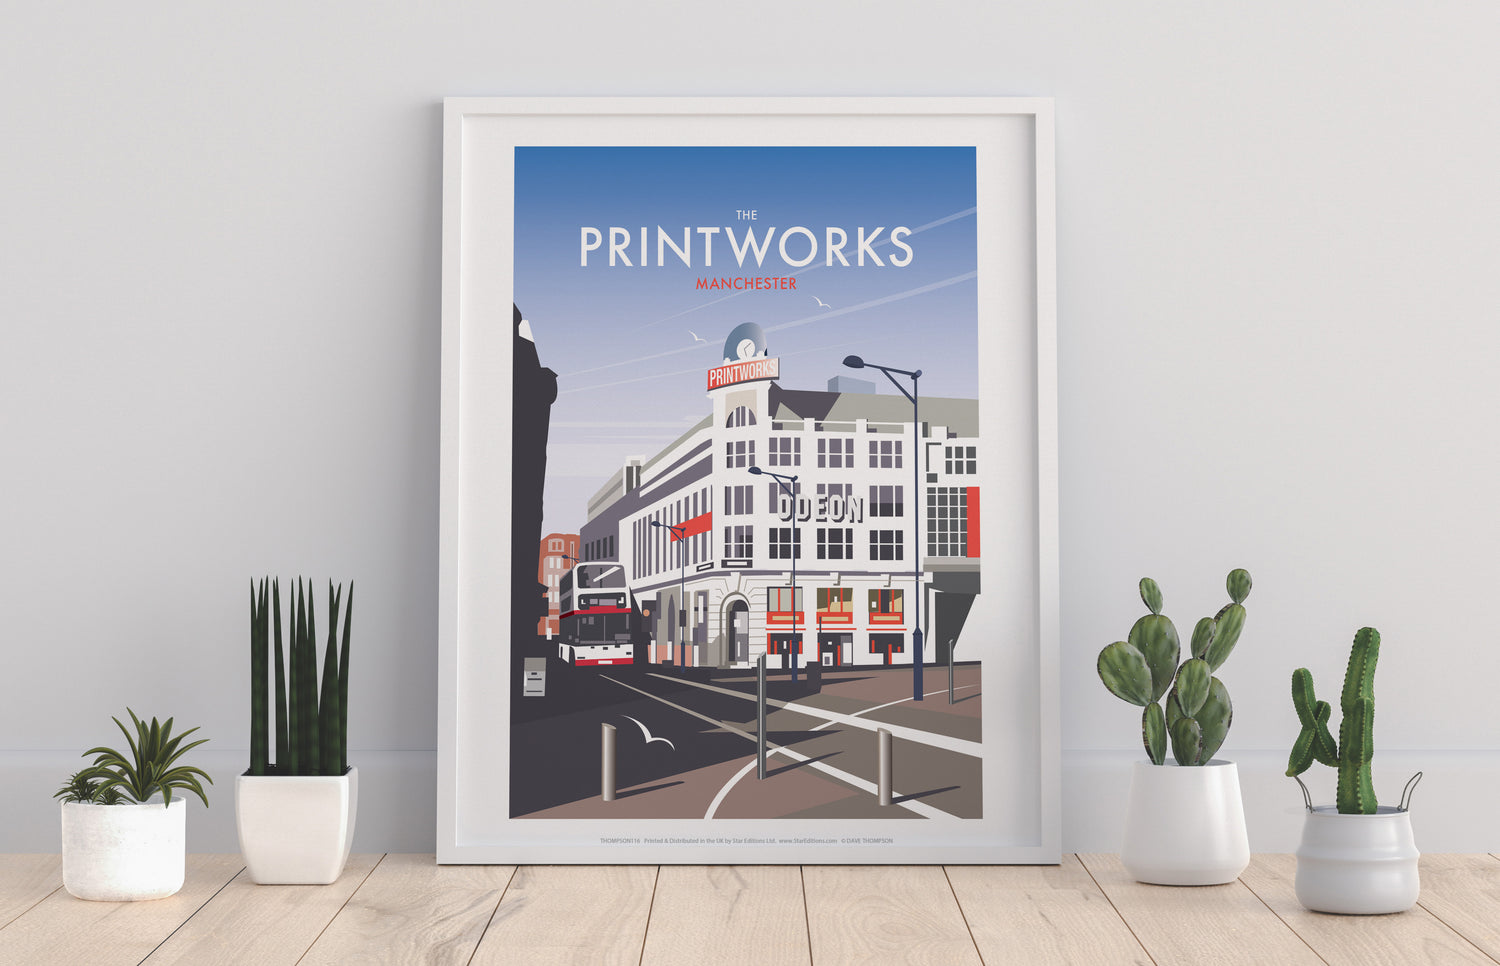 The Printworks, Manchester - Art Print